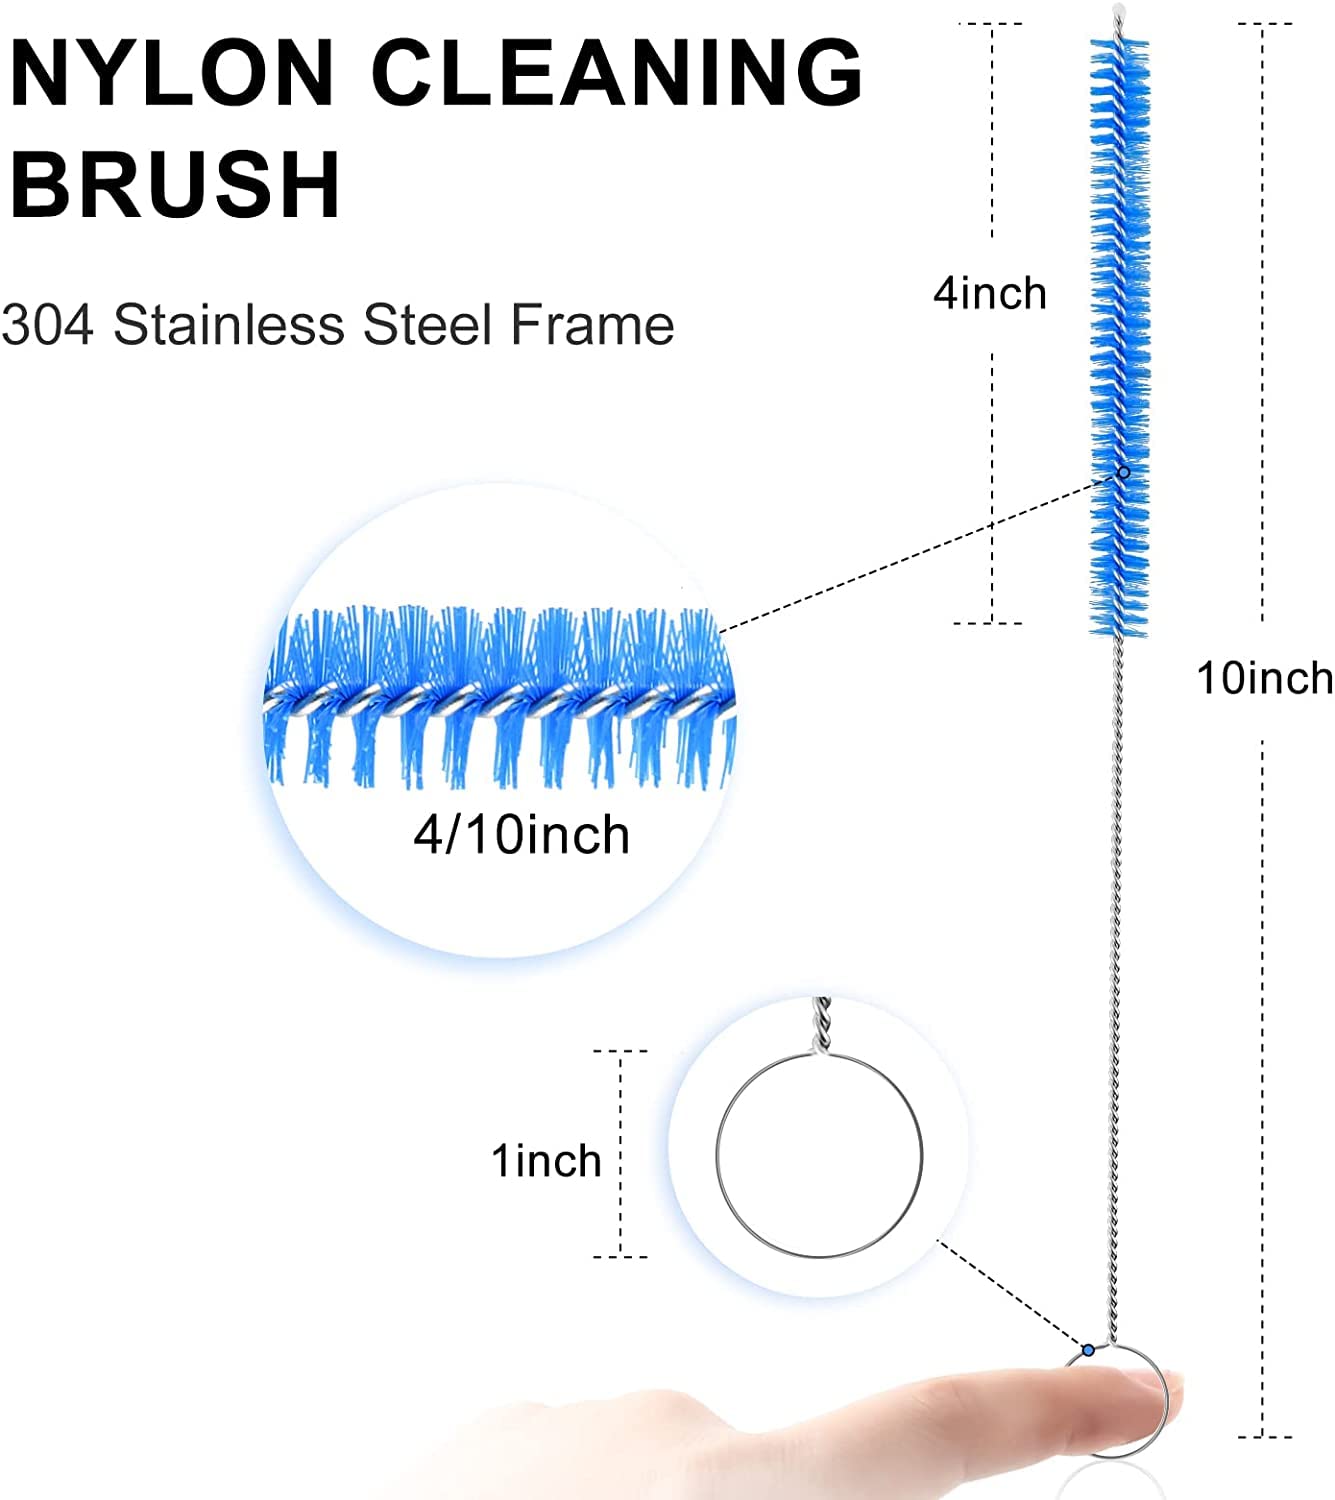 100pcs Straws Tips Reusable Silicone Straws with Flexible Straw Drain Brush Set